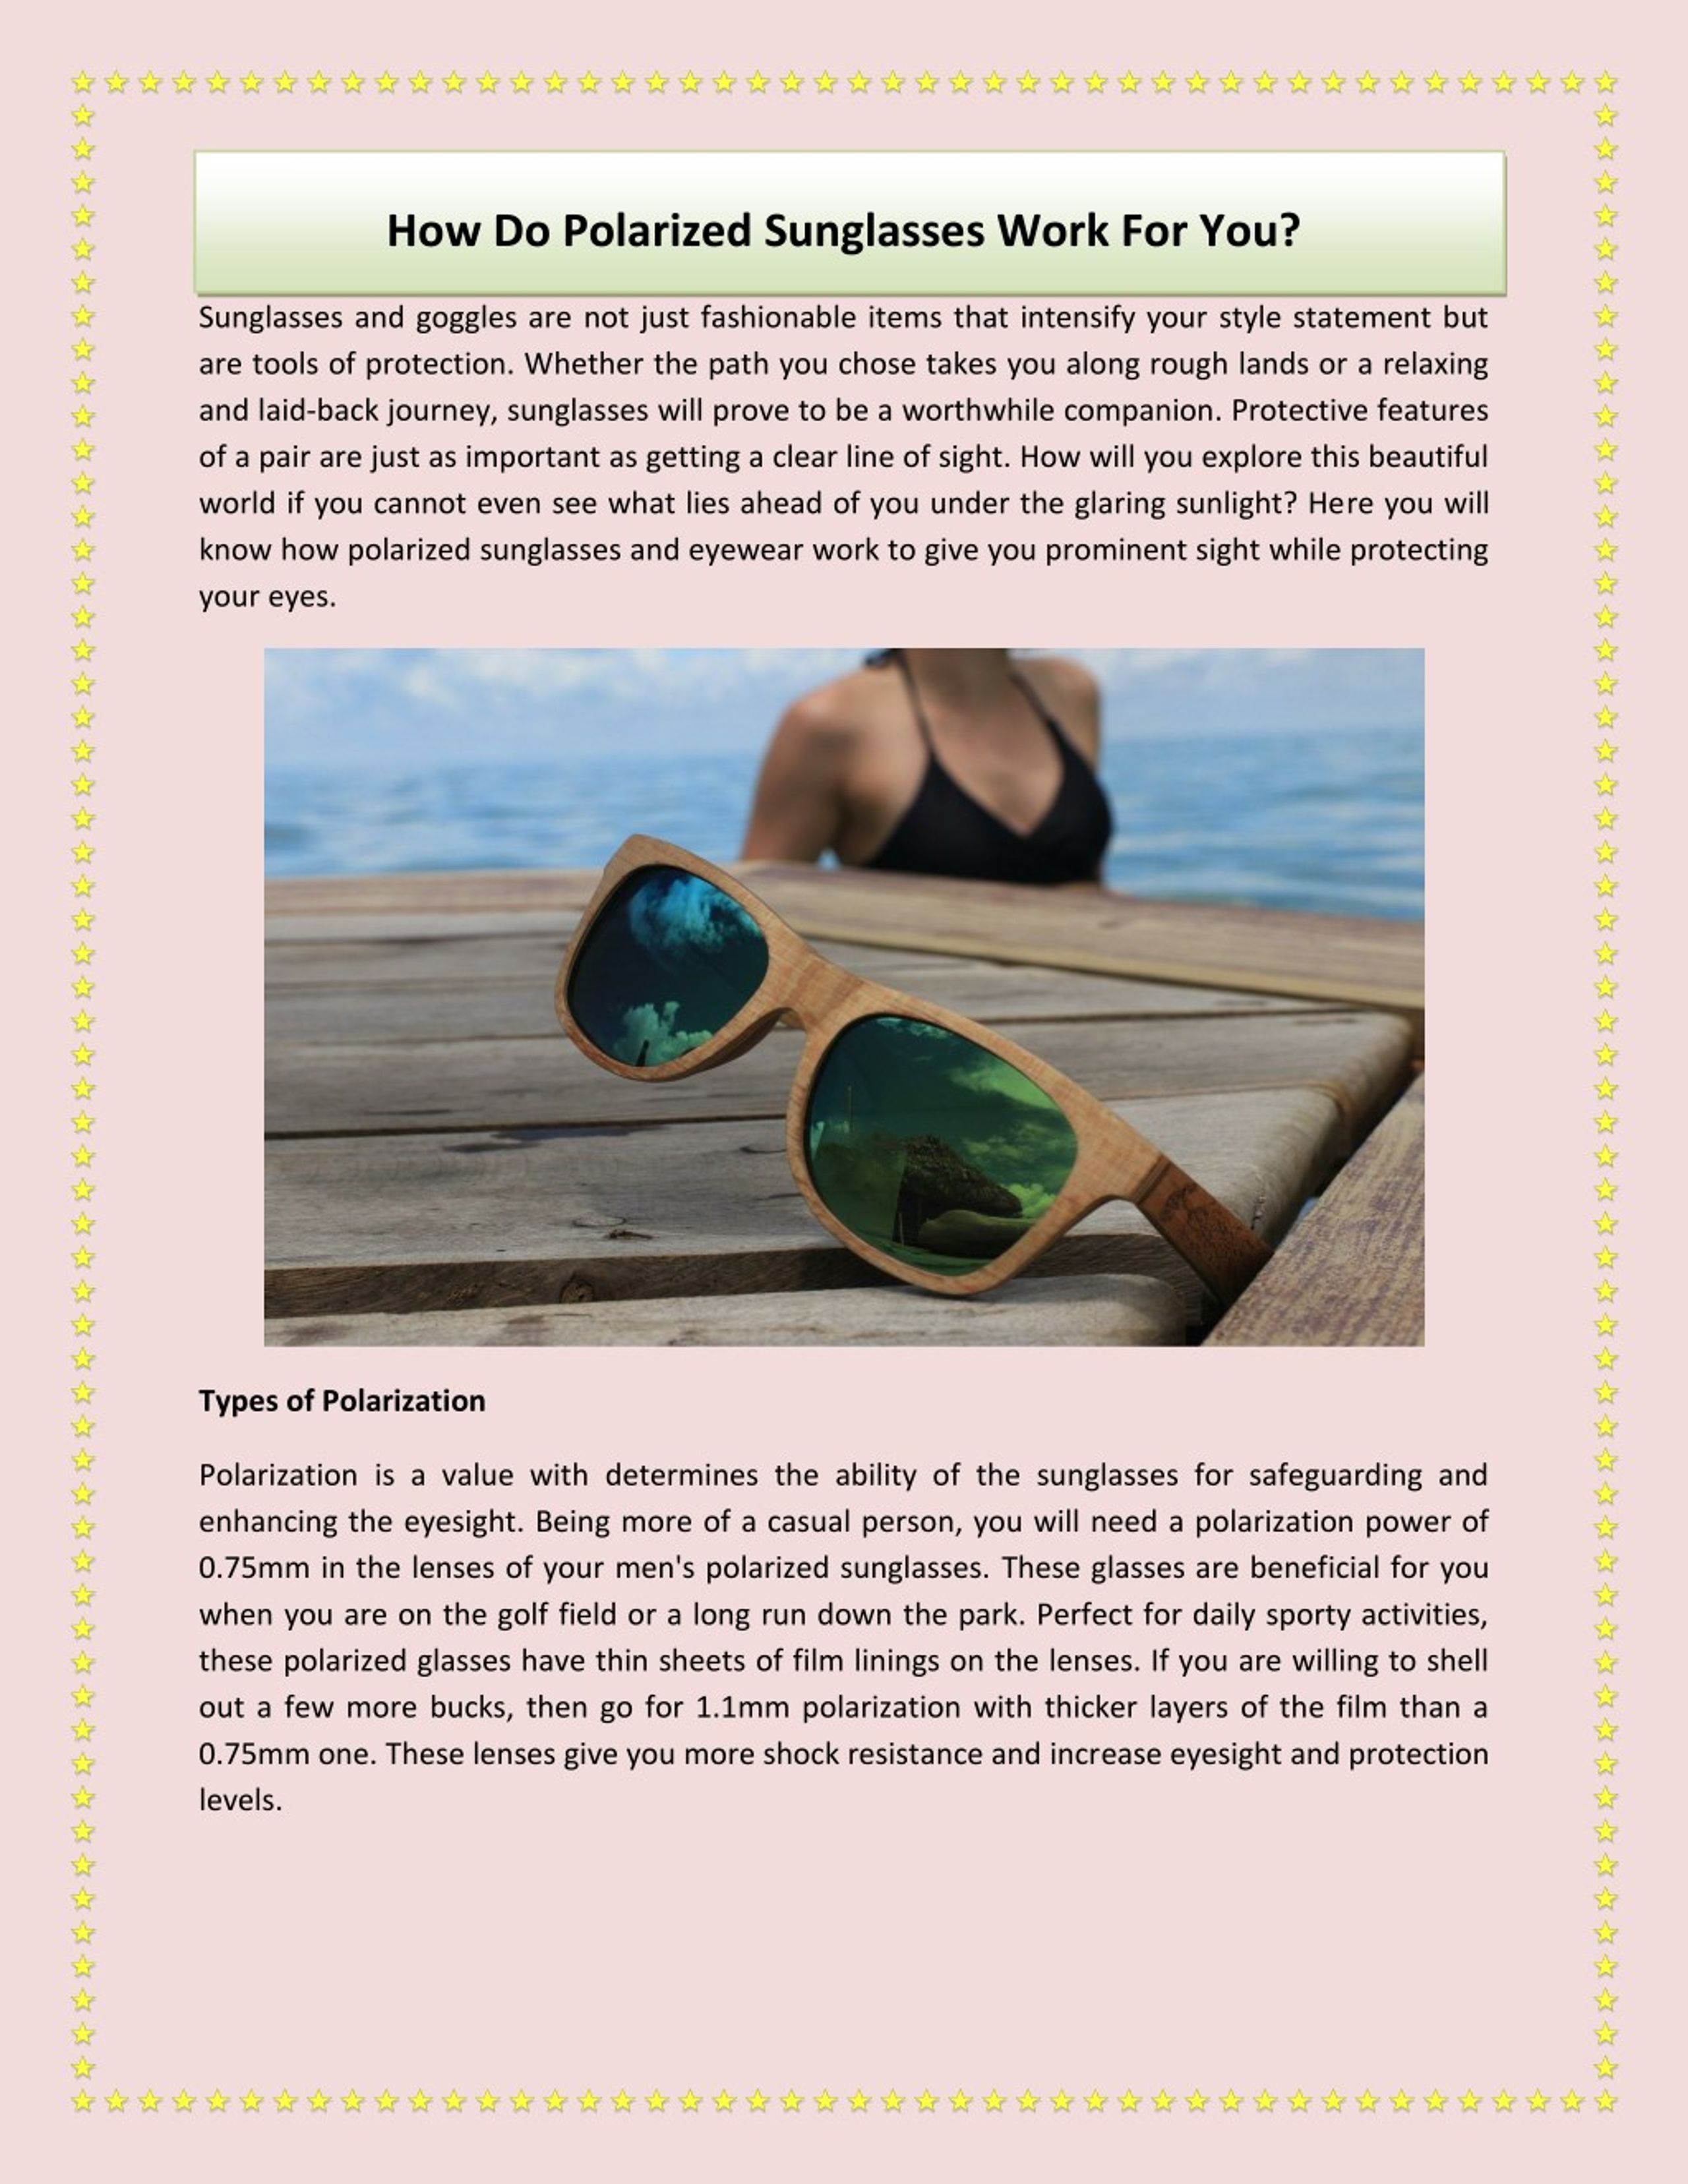 How do Men's Polarized Sunglasses Work? by ShadeTree Sunglasses